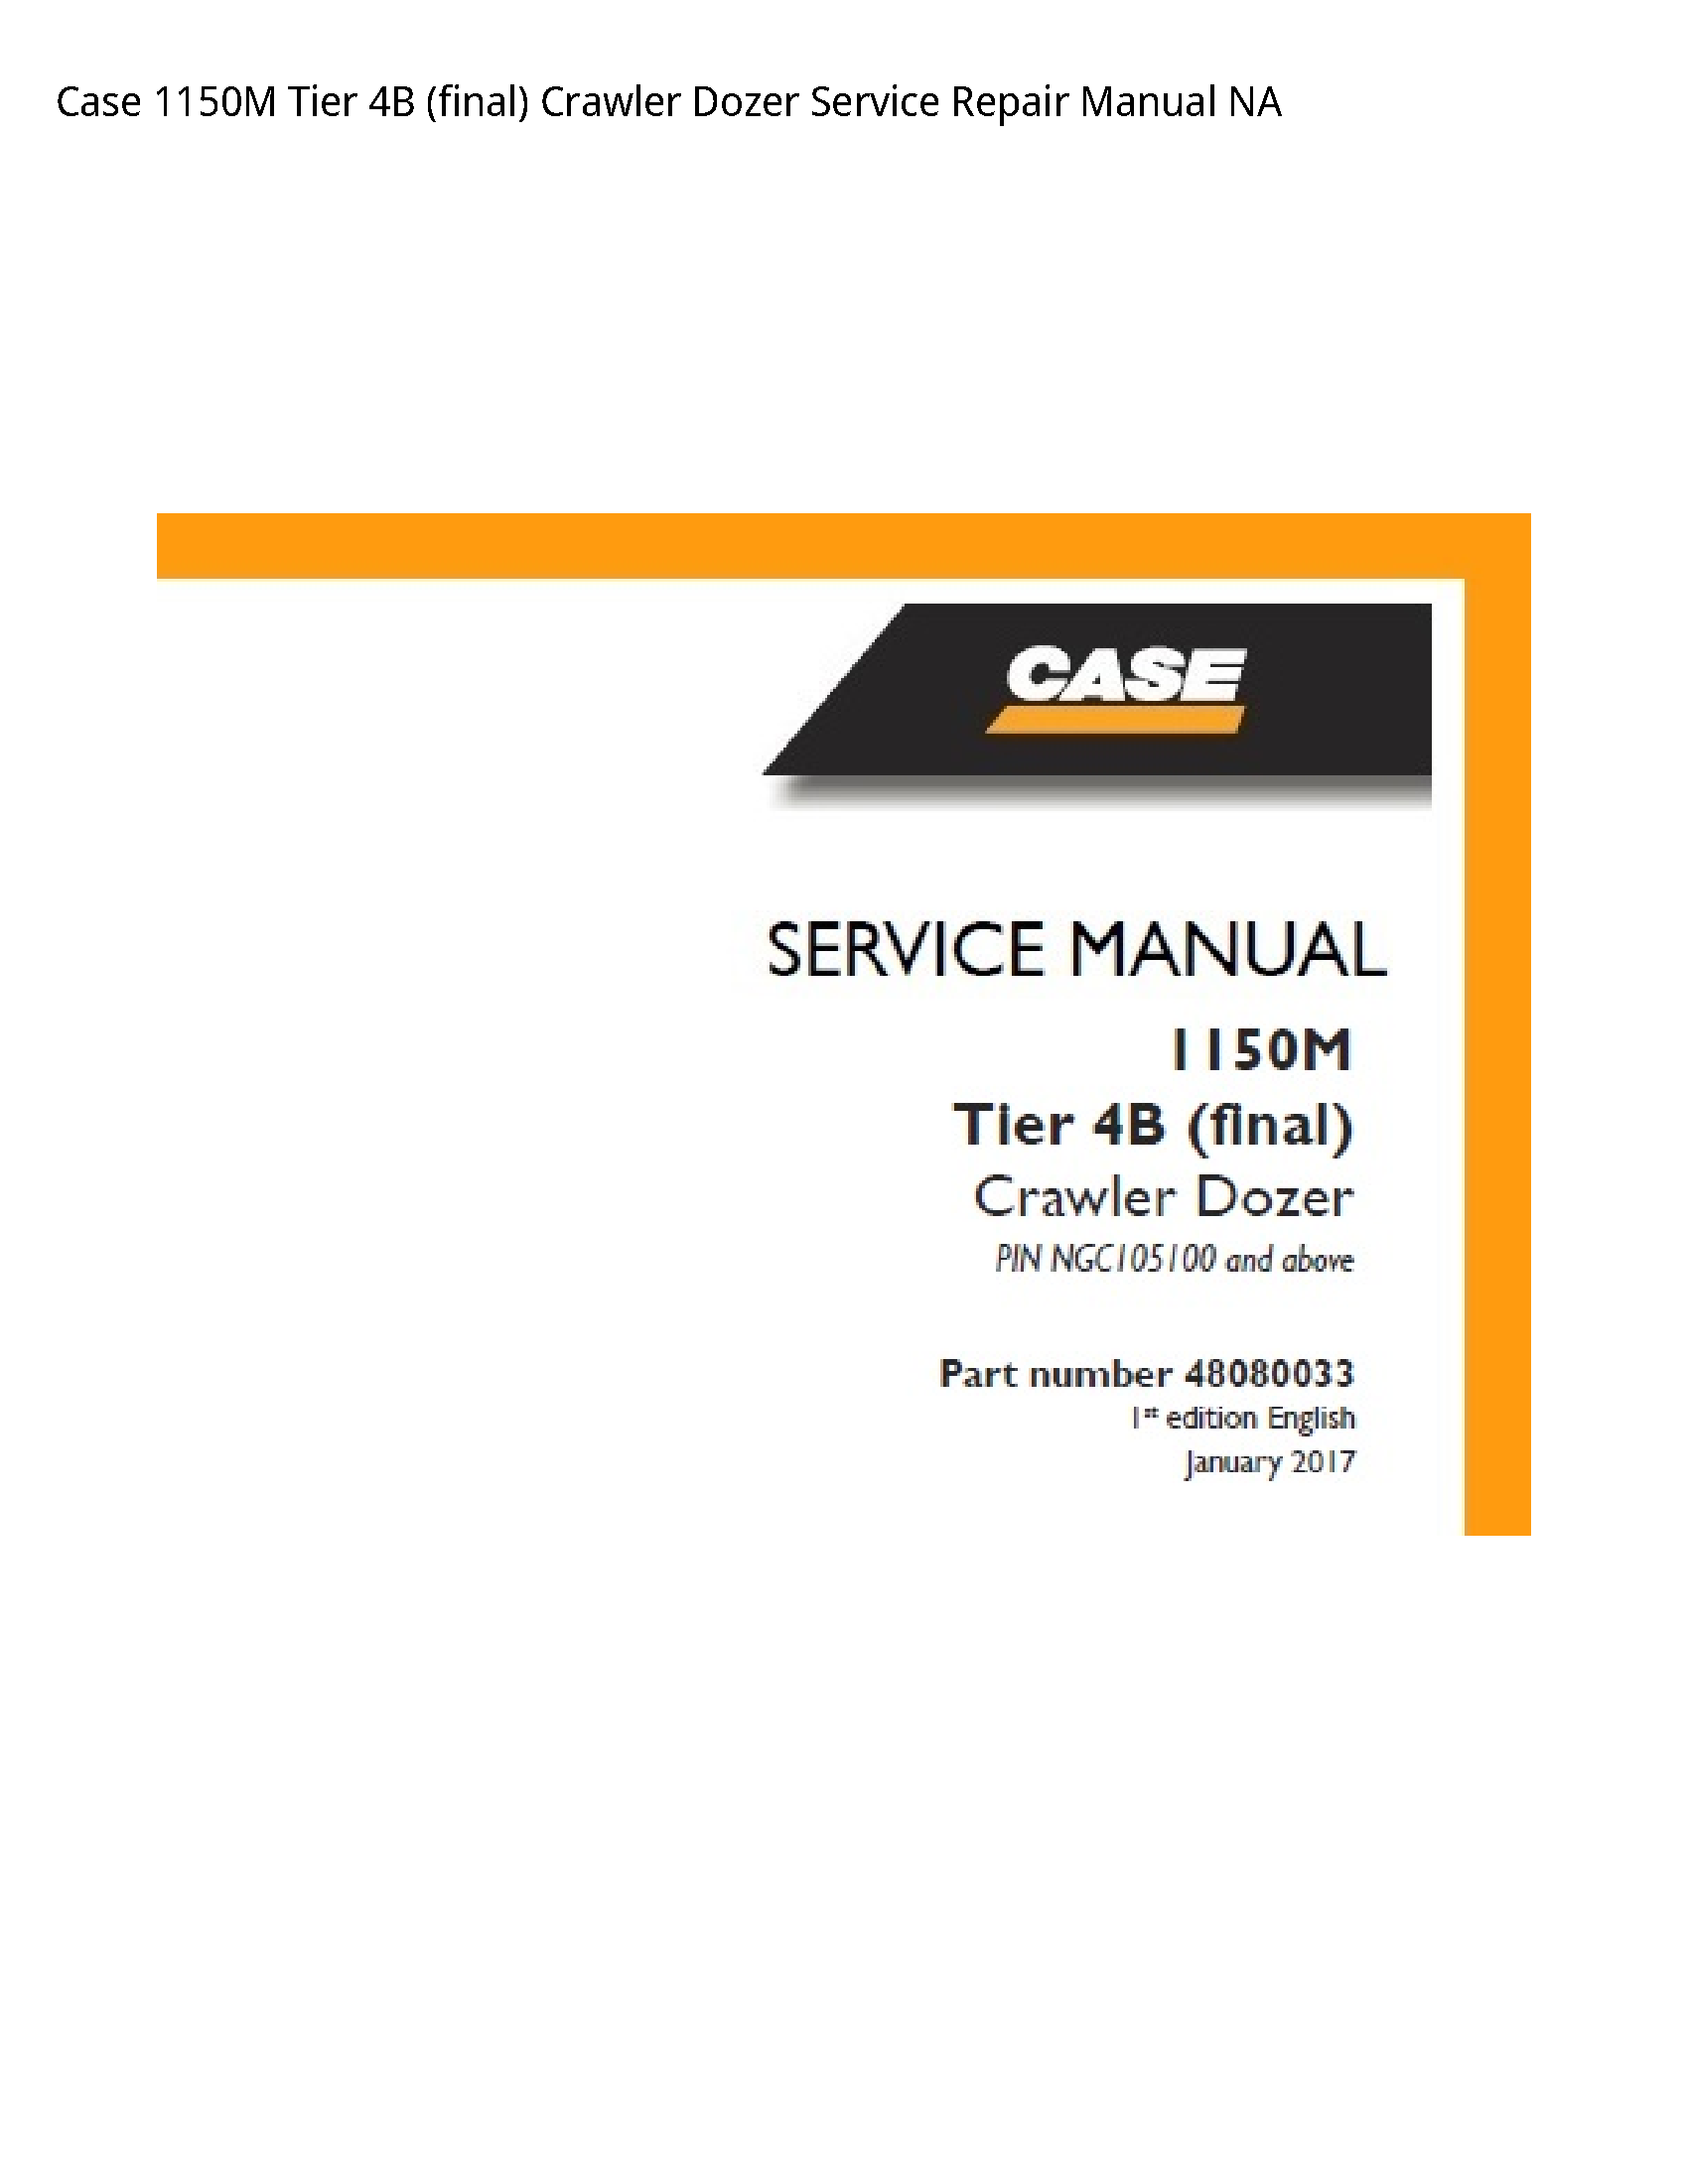 Case/Case IH 1150M Tier (final) Crawler Dozer manual